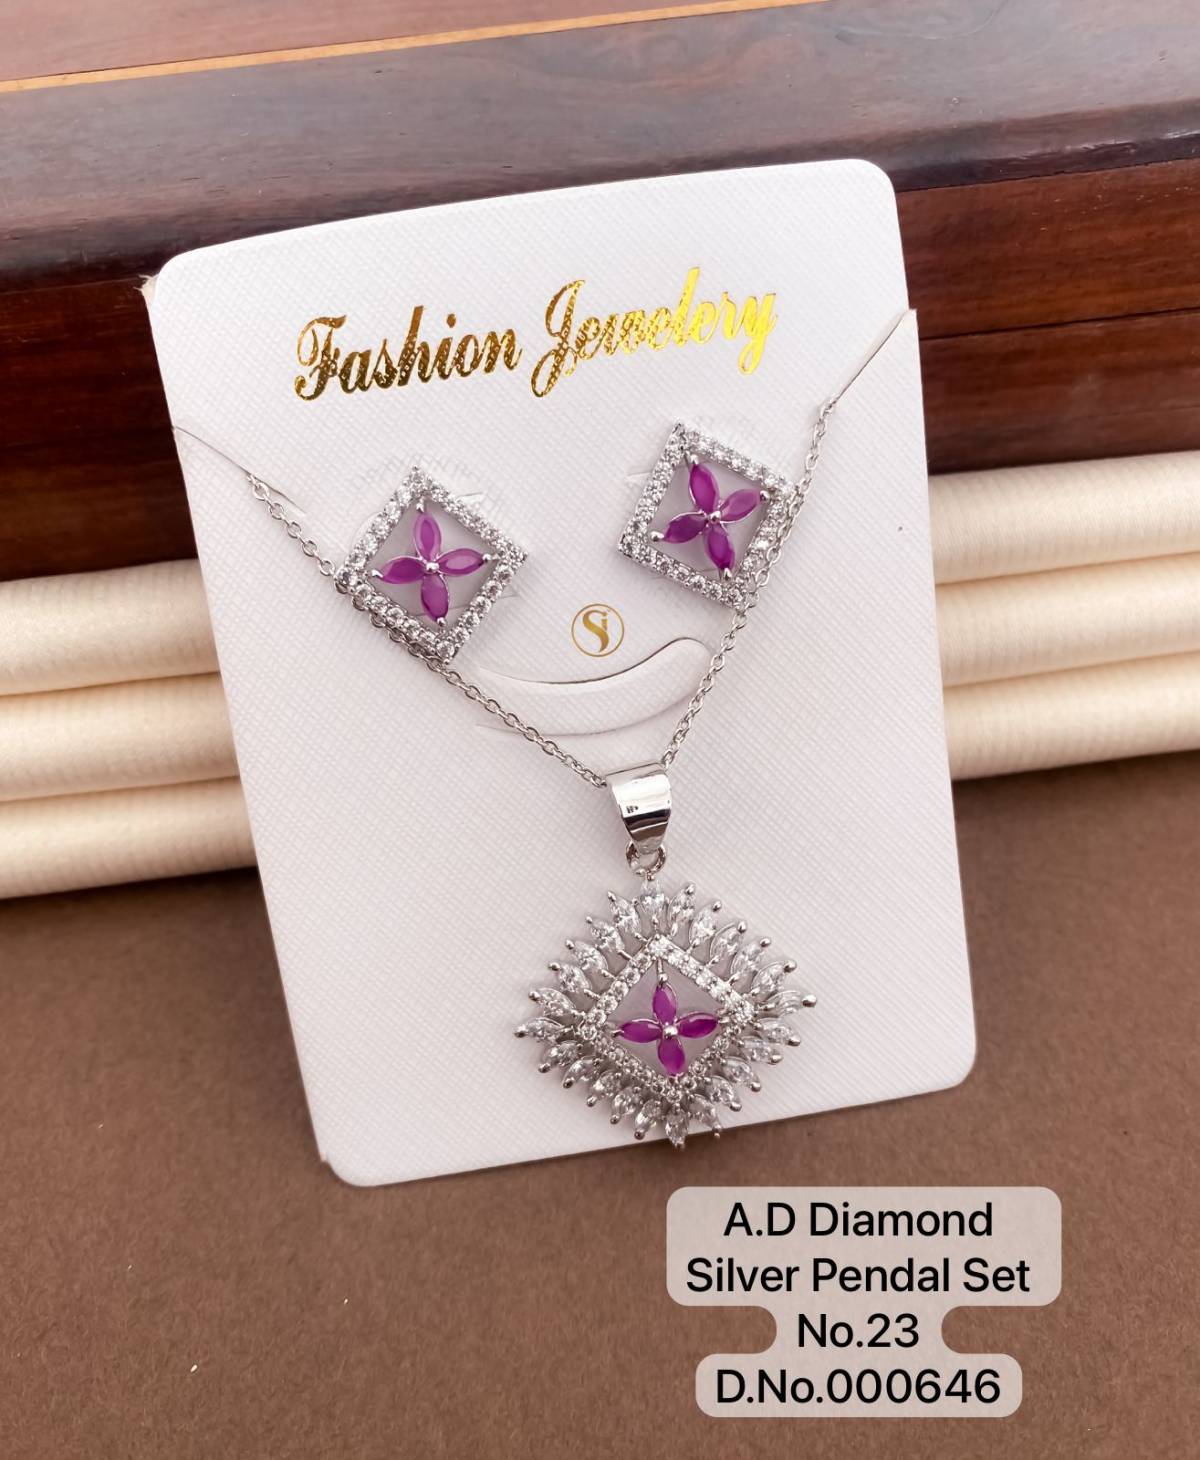 Buy Diamond Earrings Designs Online for Women - Vaibhav Jewellers